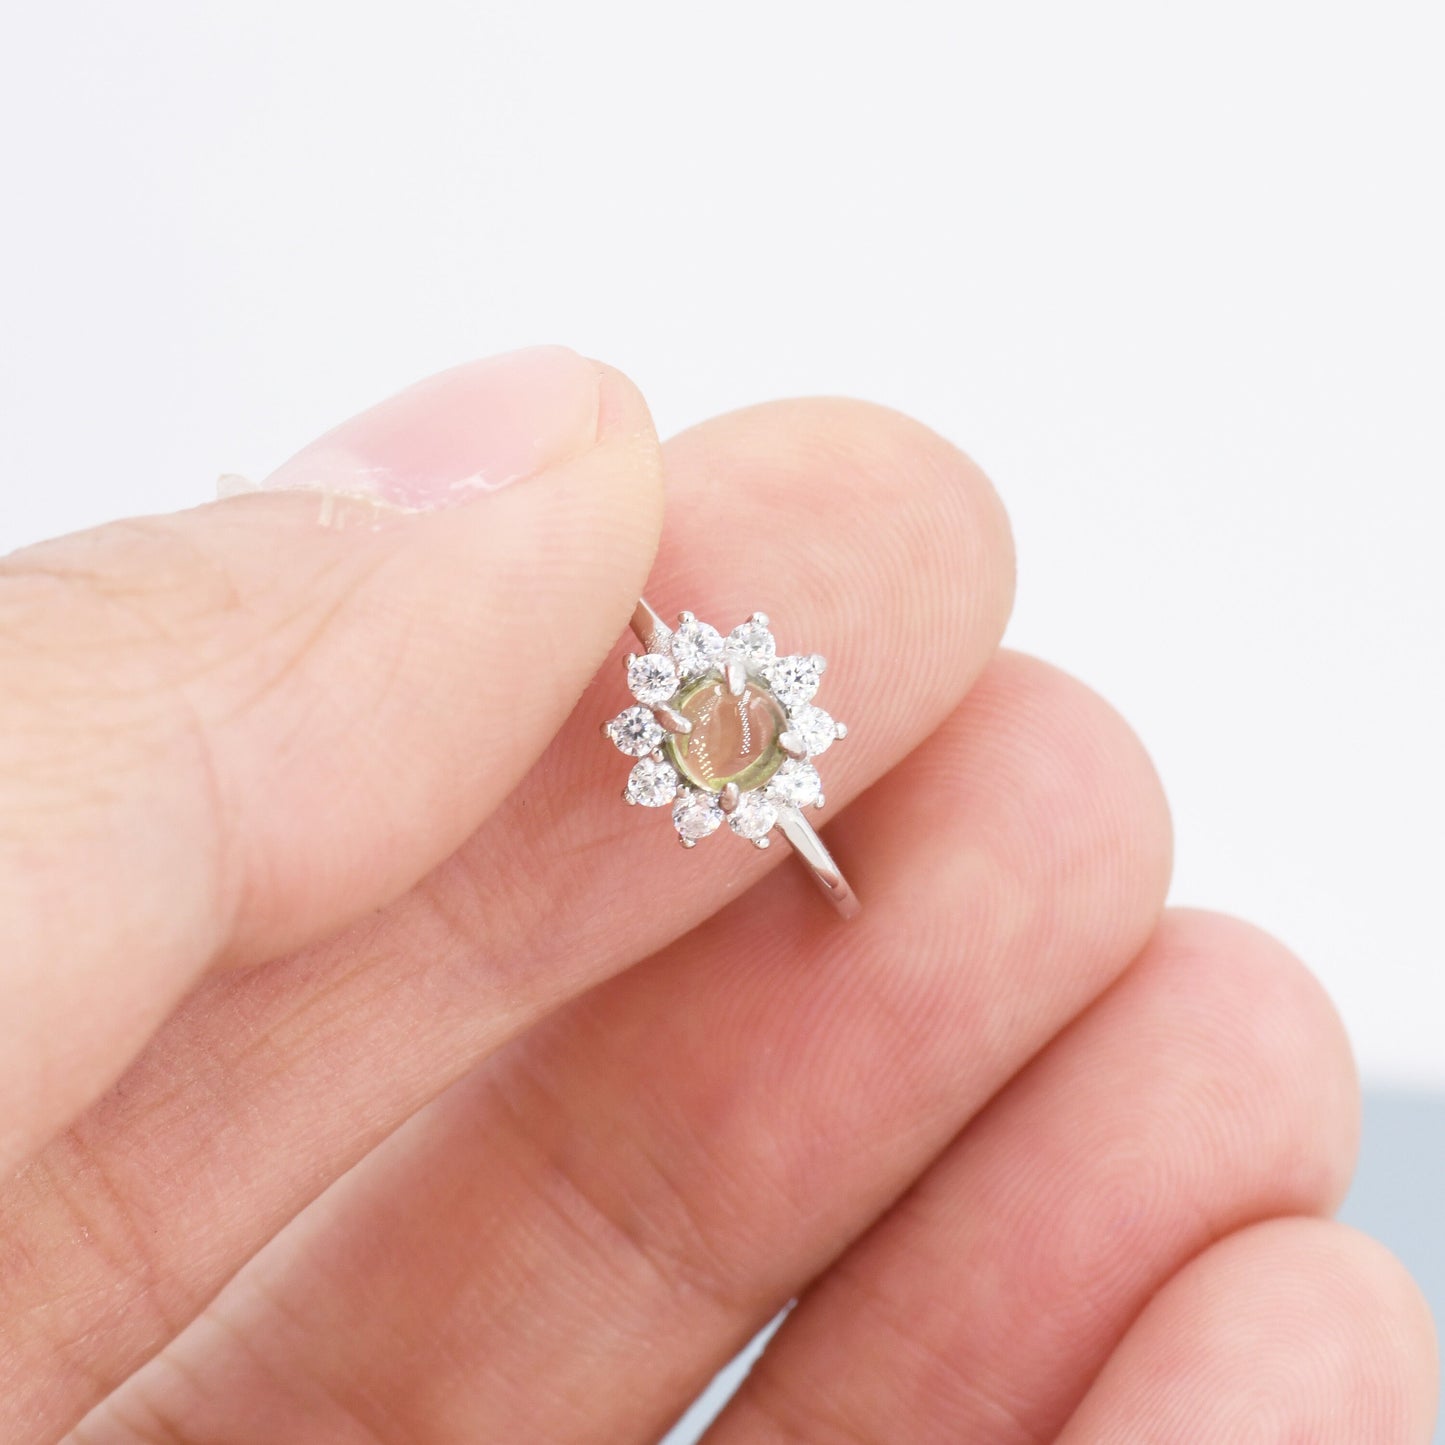 Genuine Peridot Halo Ring in Sterling Silver, US 5 - 8, Natural Peridot Gemstone Ring,  Crystal Flower Ring